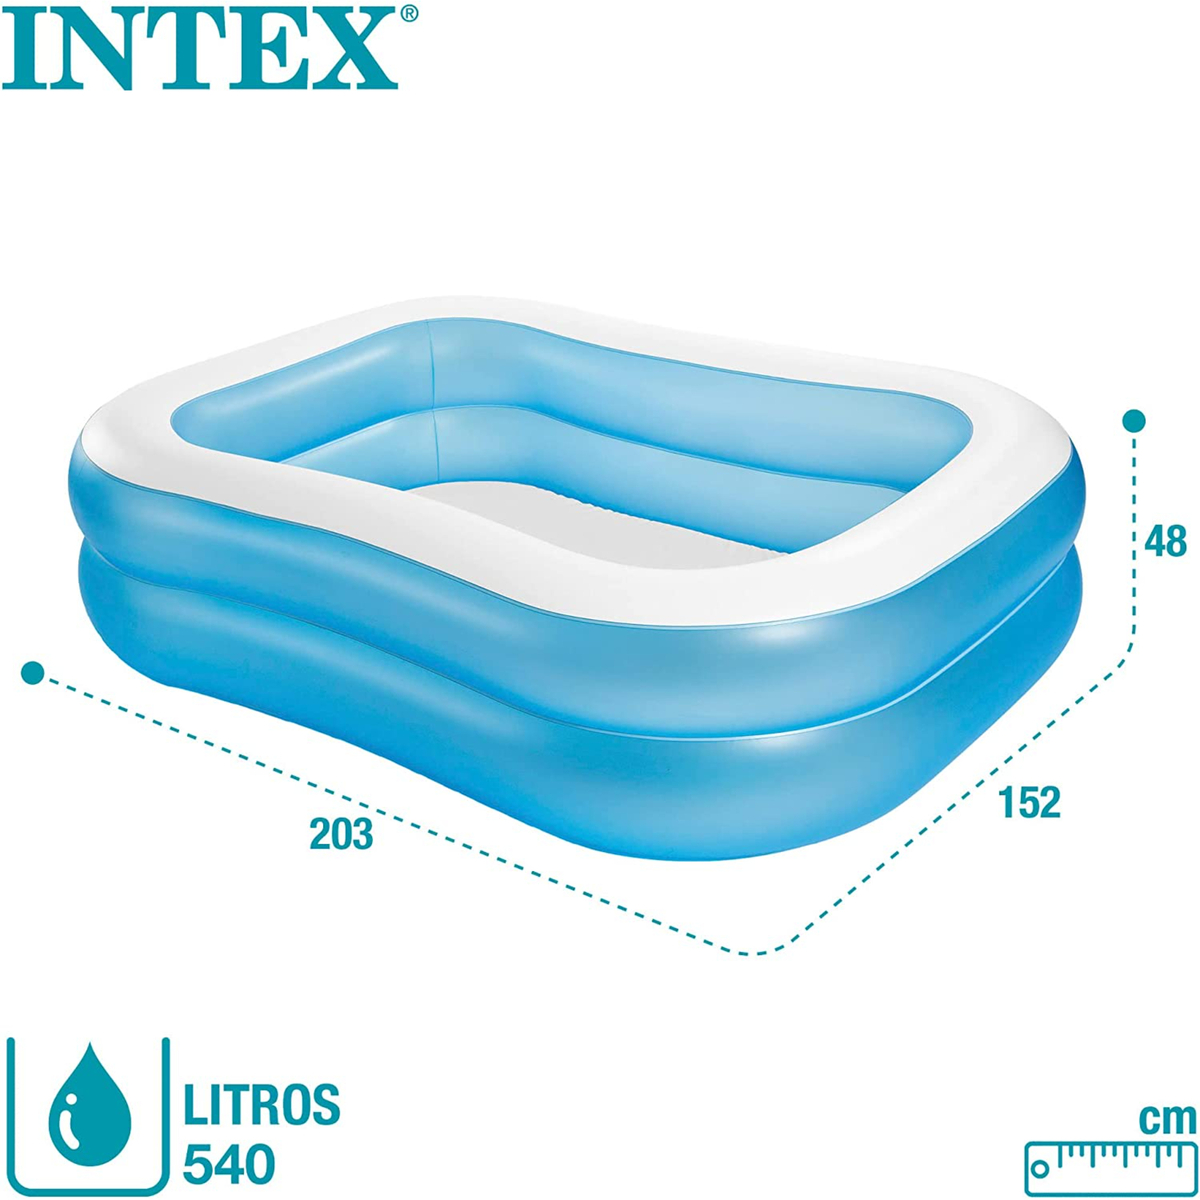 Intex Large Pool, Swim Center Family Pool, 80.6 x 59.8 x 18.9 inches (203 x 152 x 48 cm), Blue 57180